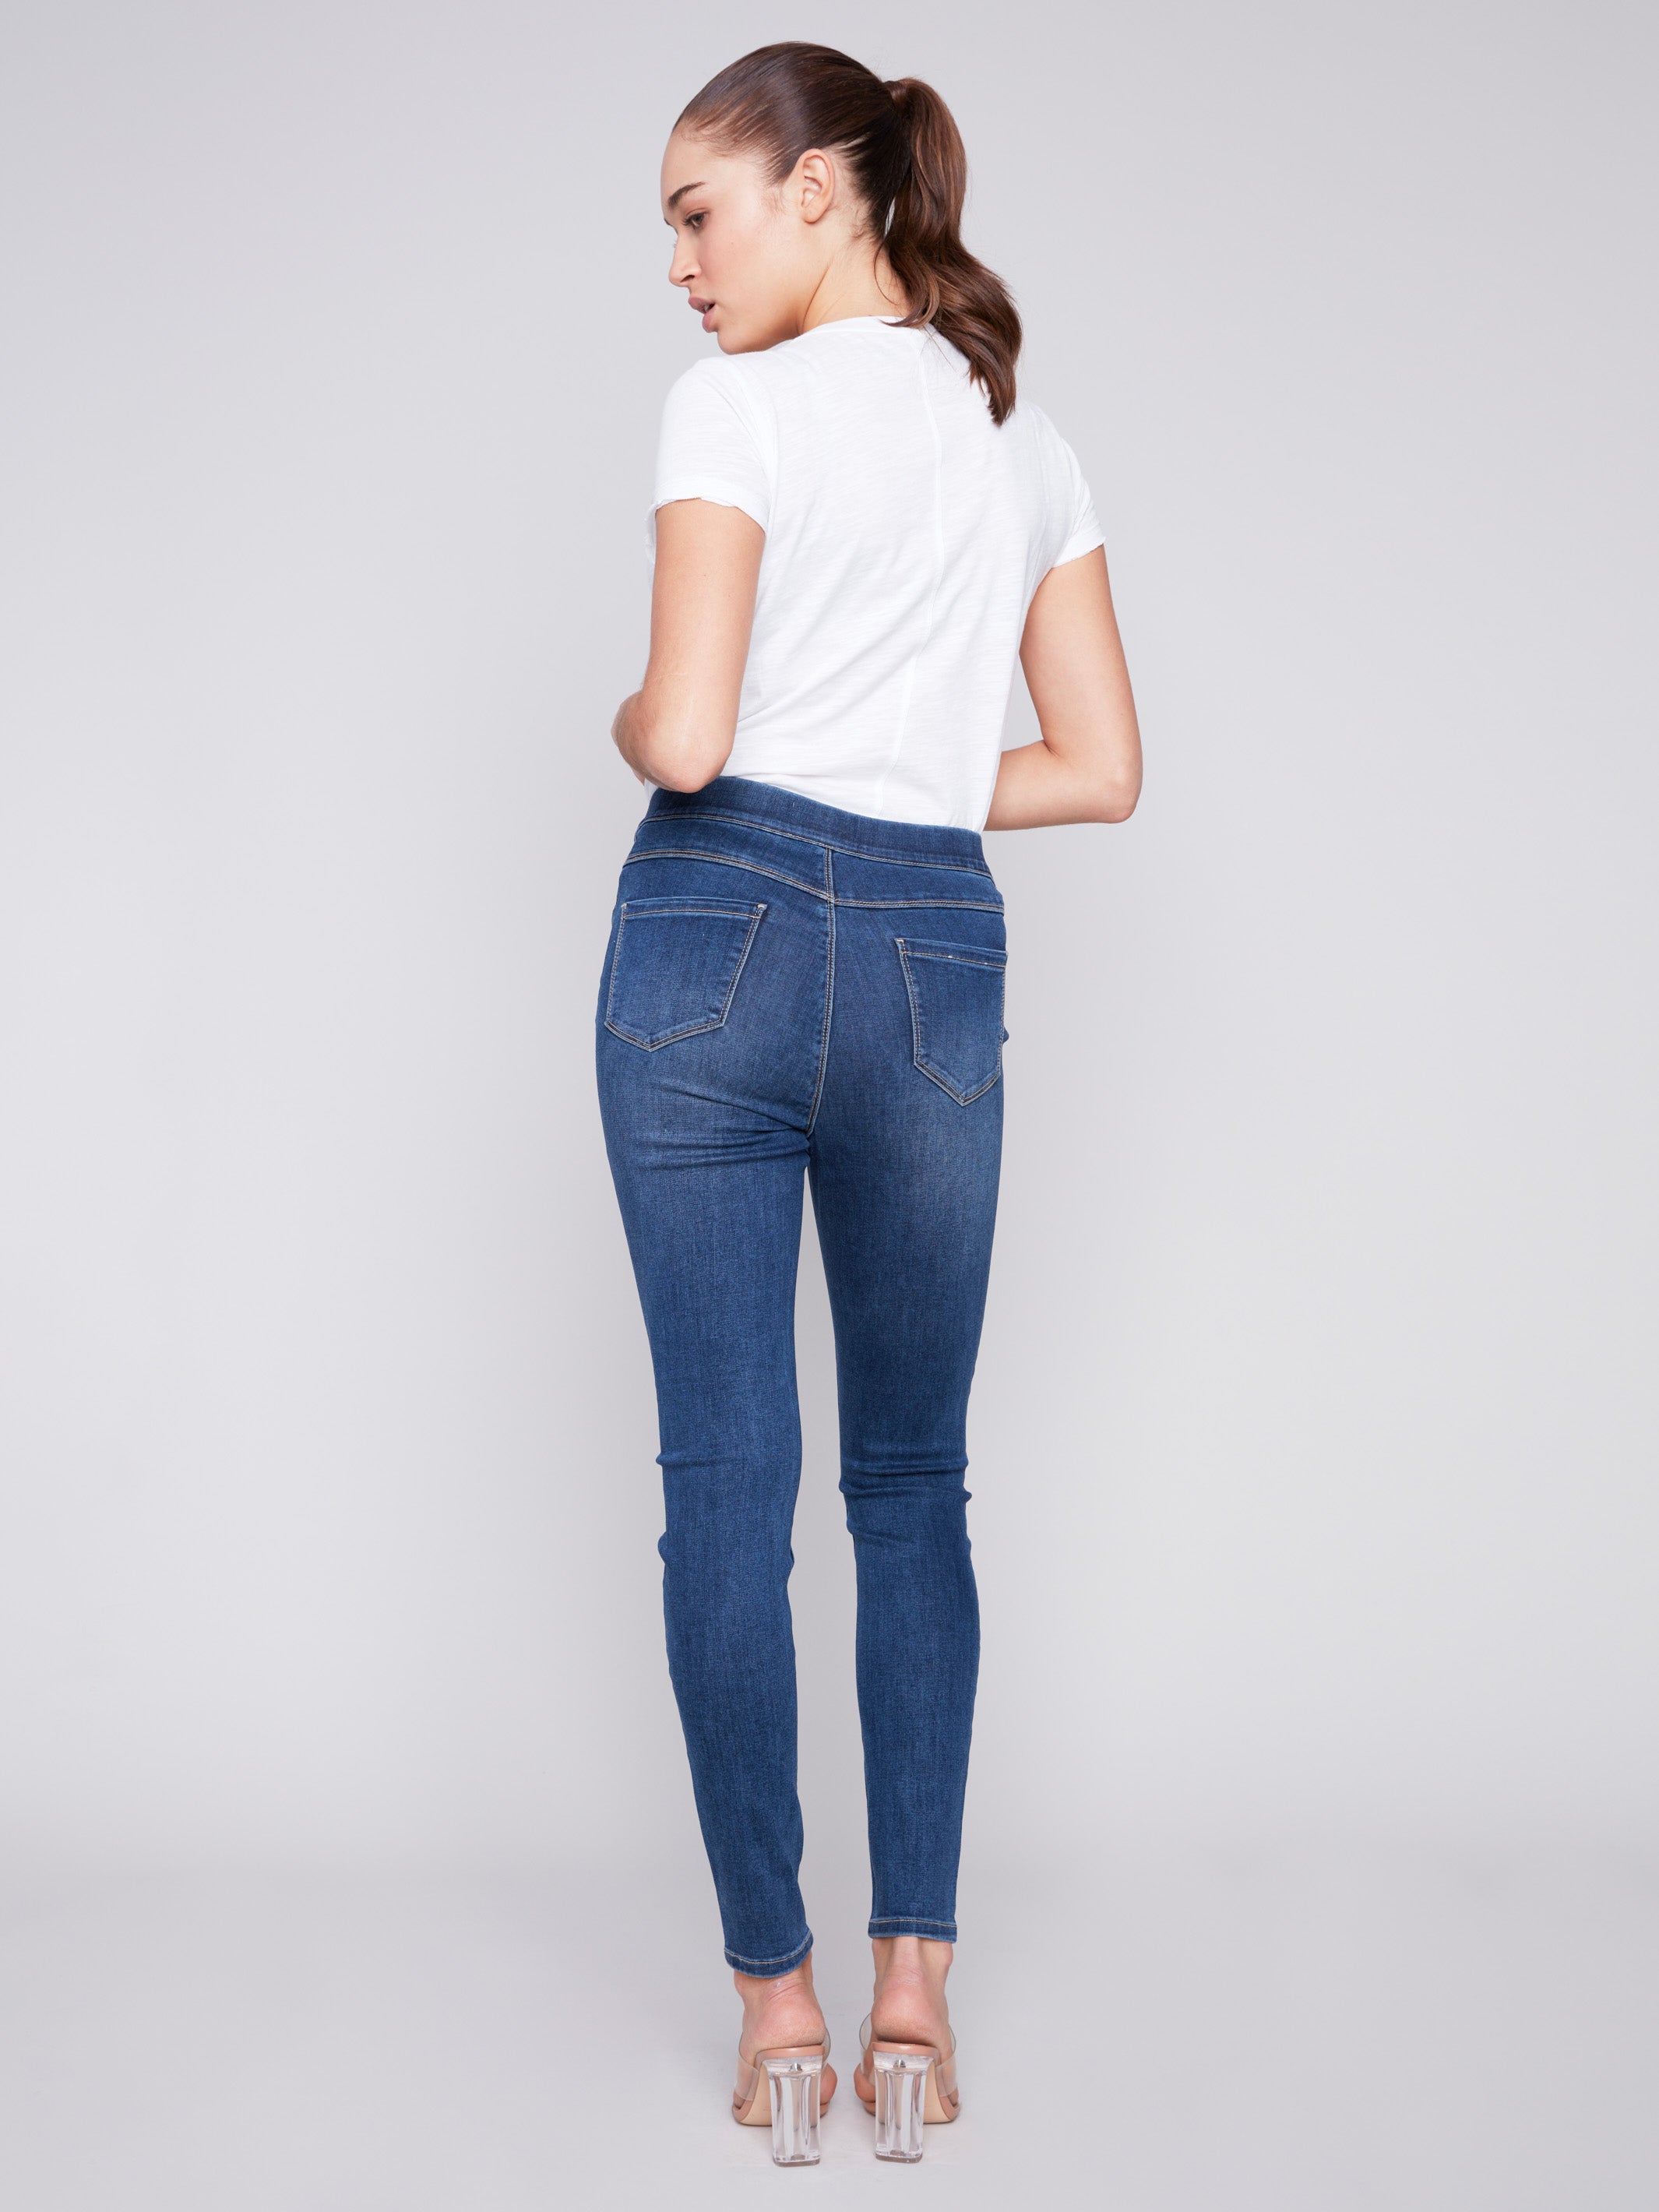 Women's Pull-On Pants | Denim, Indigo, Jeans | Charlie B